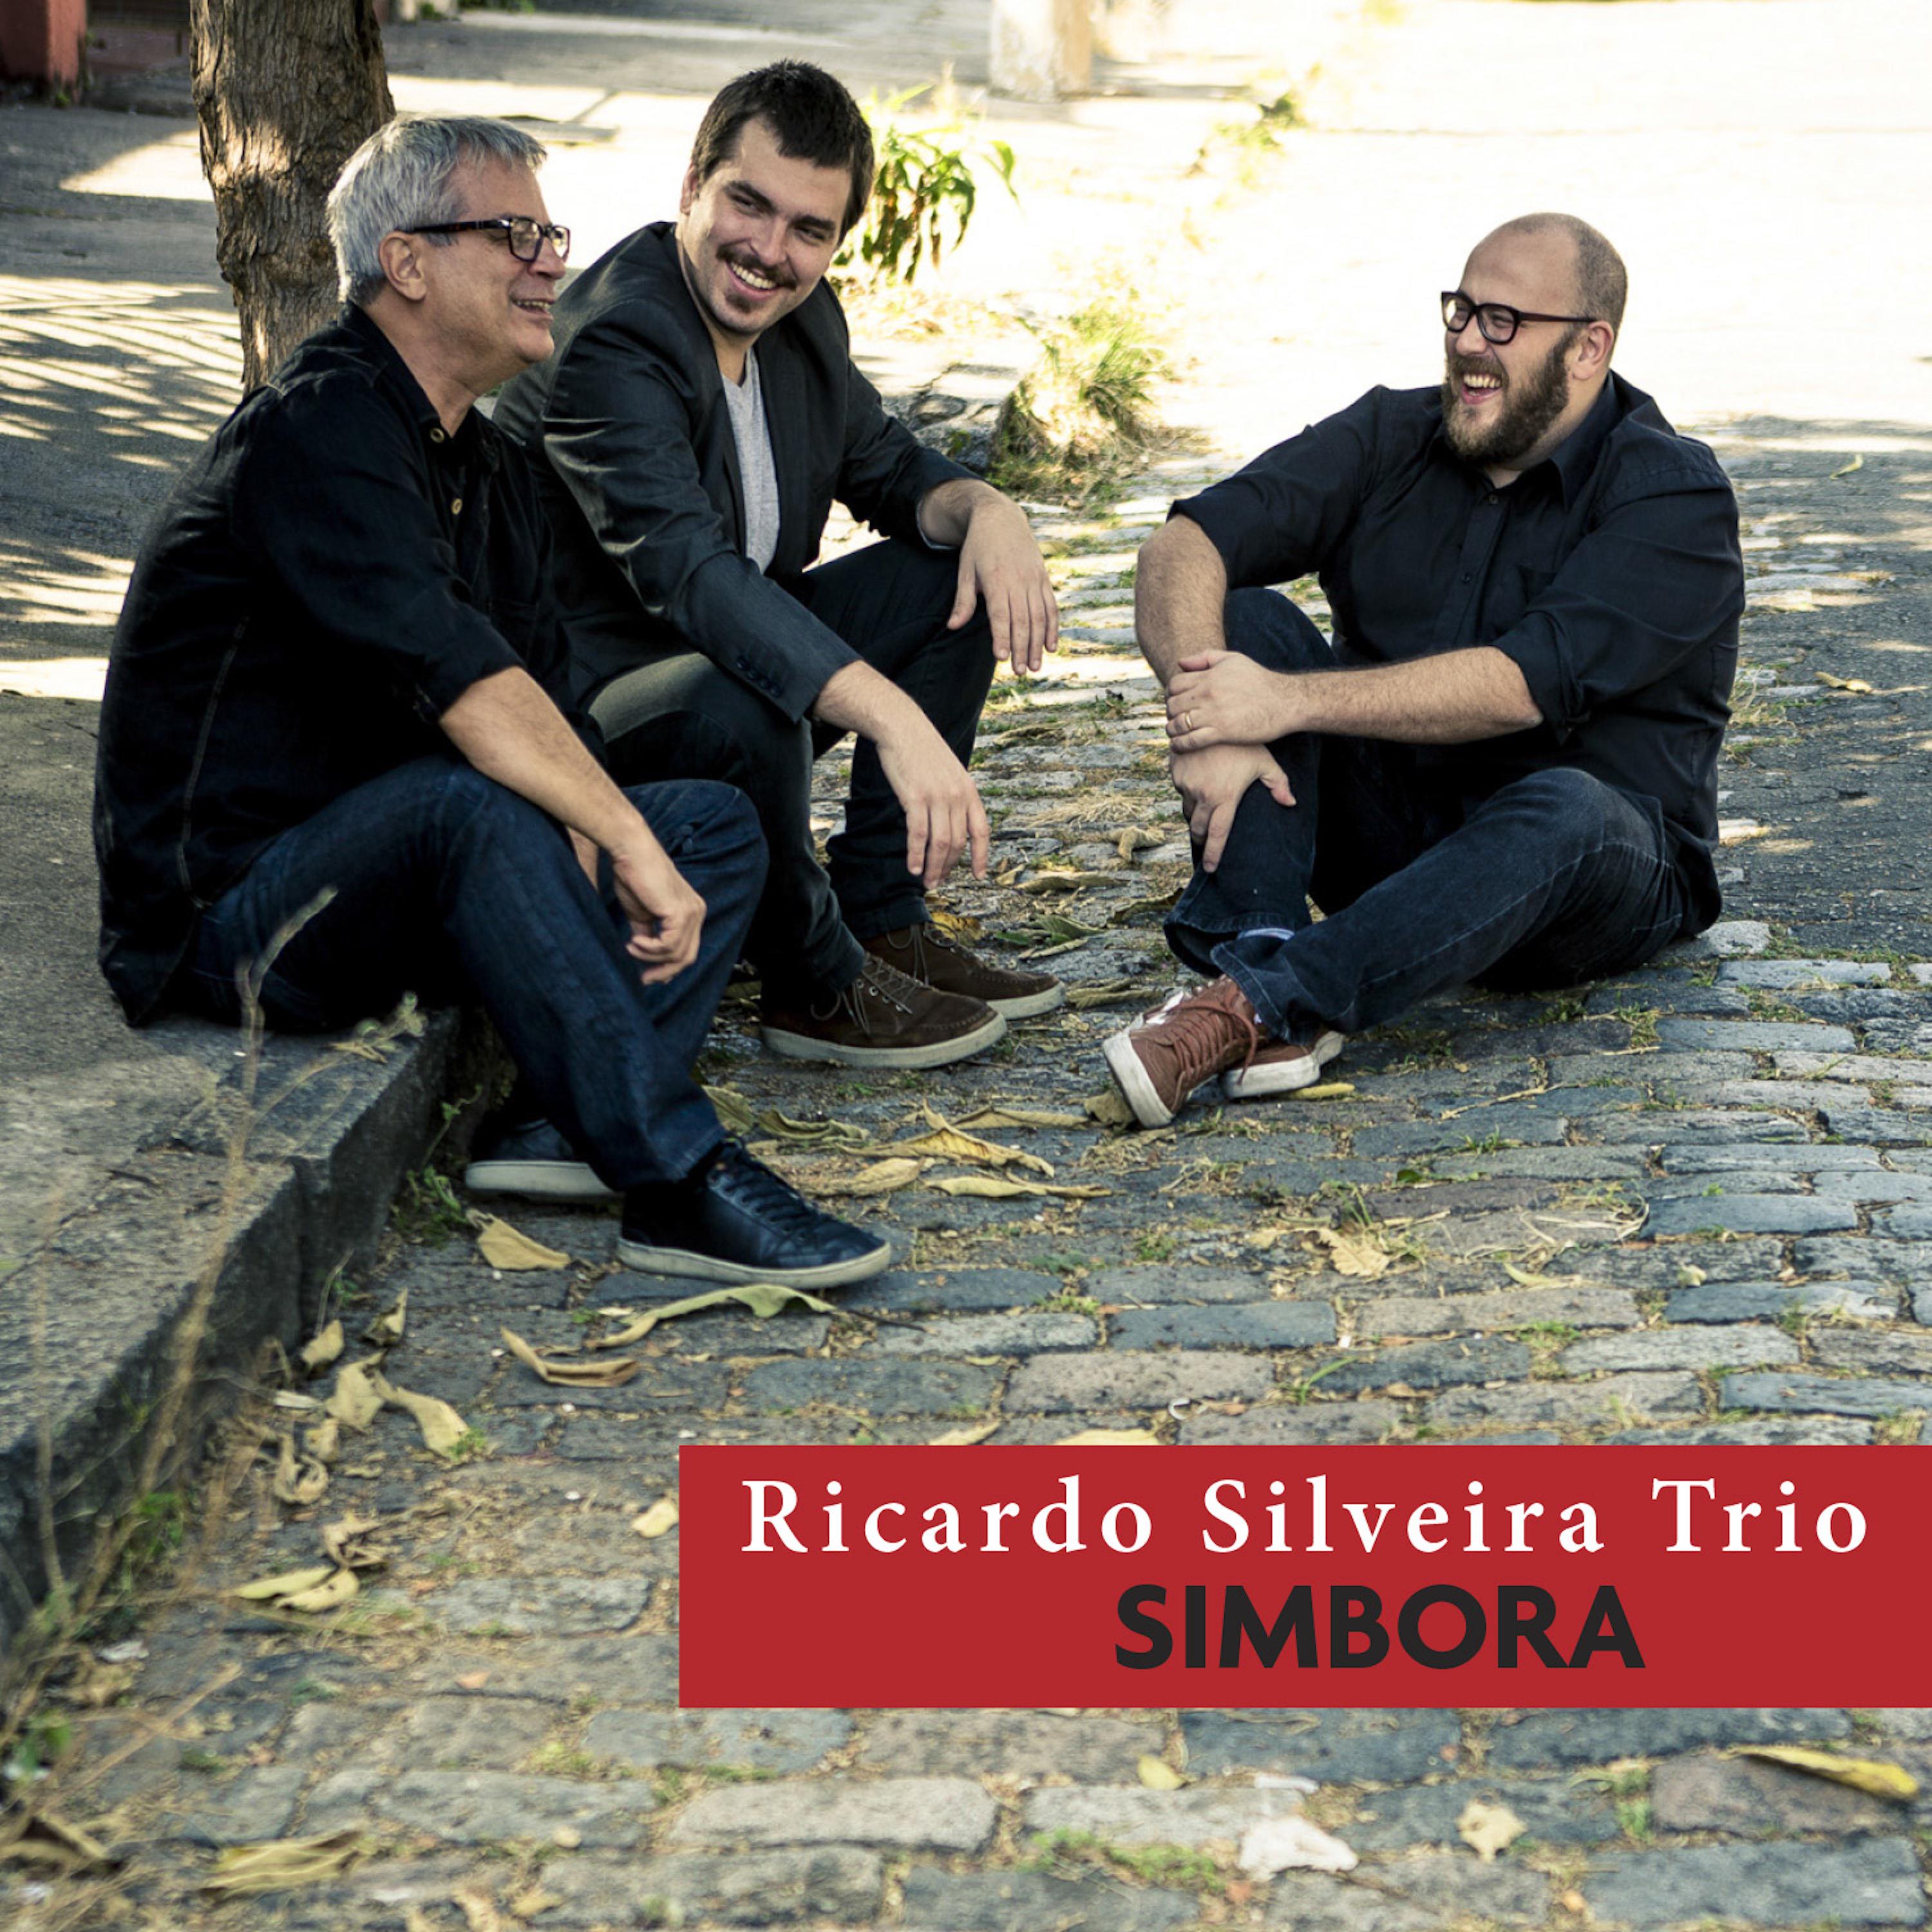 Ricardo Silveira Trio – Simbora (2017) [HDTracks FLAC 24bit/96kHz]